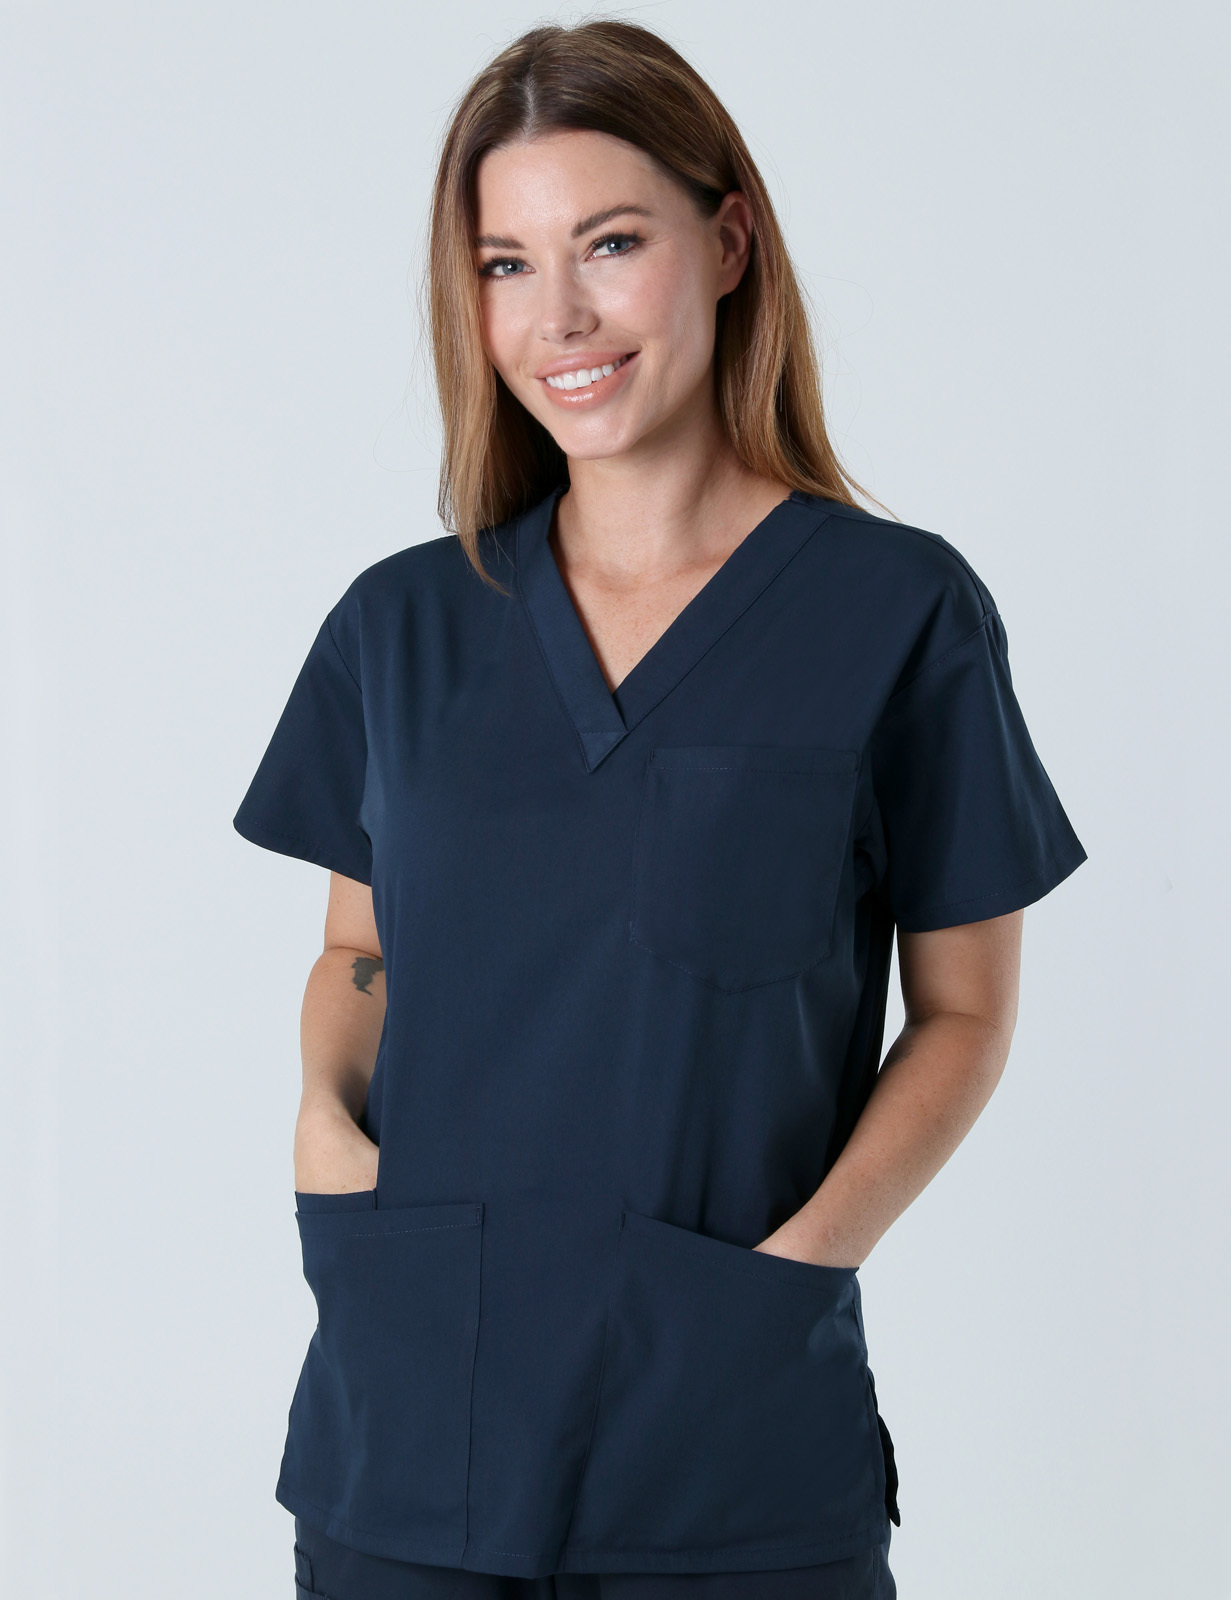 Monash Health Newborn Nurse Uniform Set Bundle ( 4 Pocket Top and Cargo Pants in Navy + Logo)